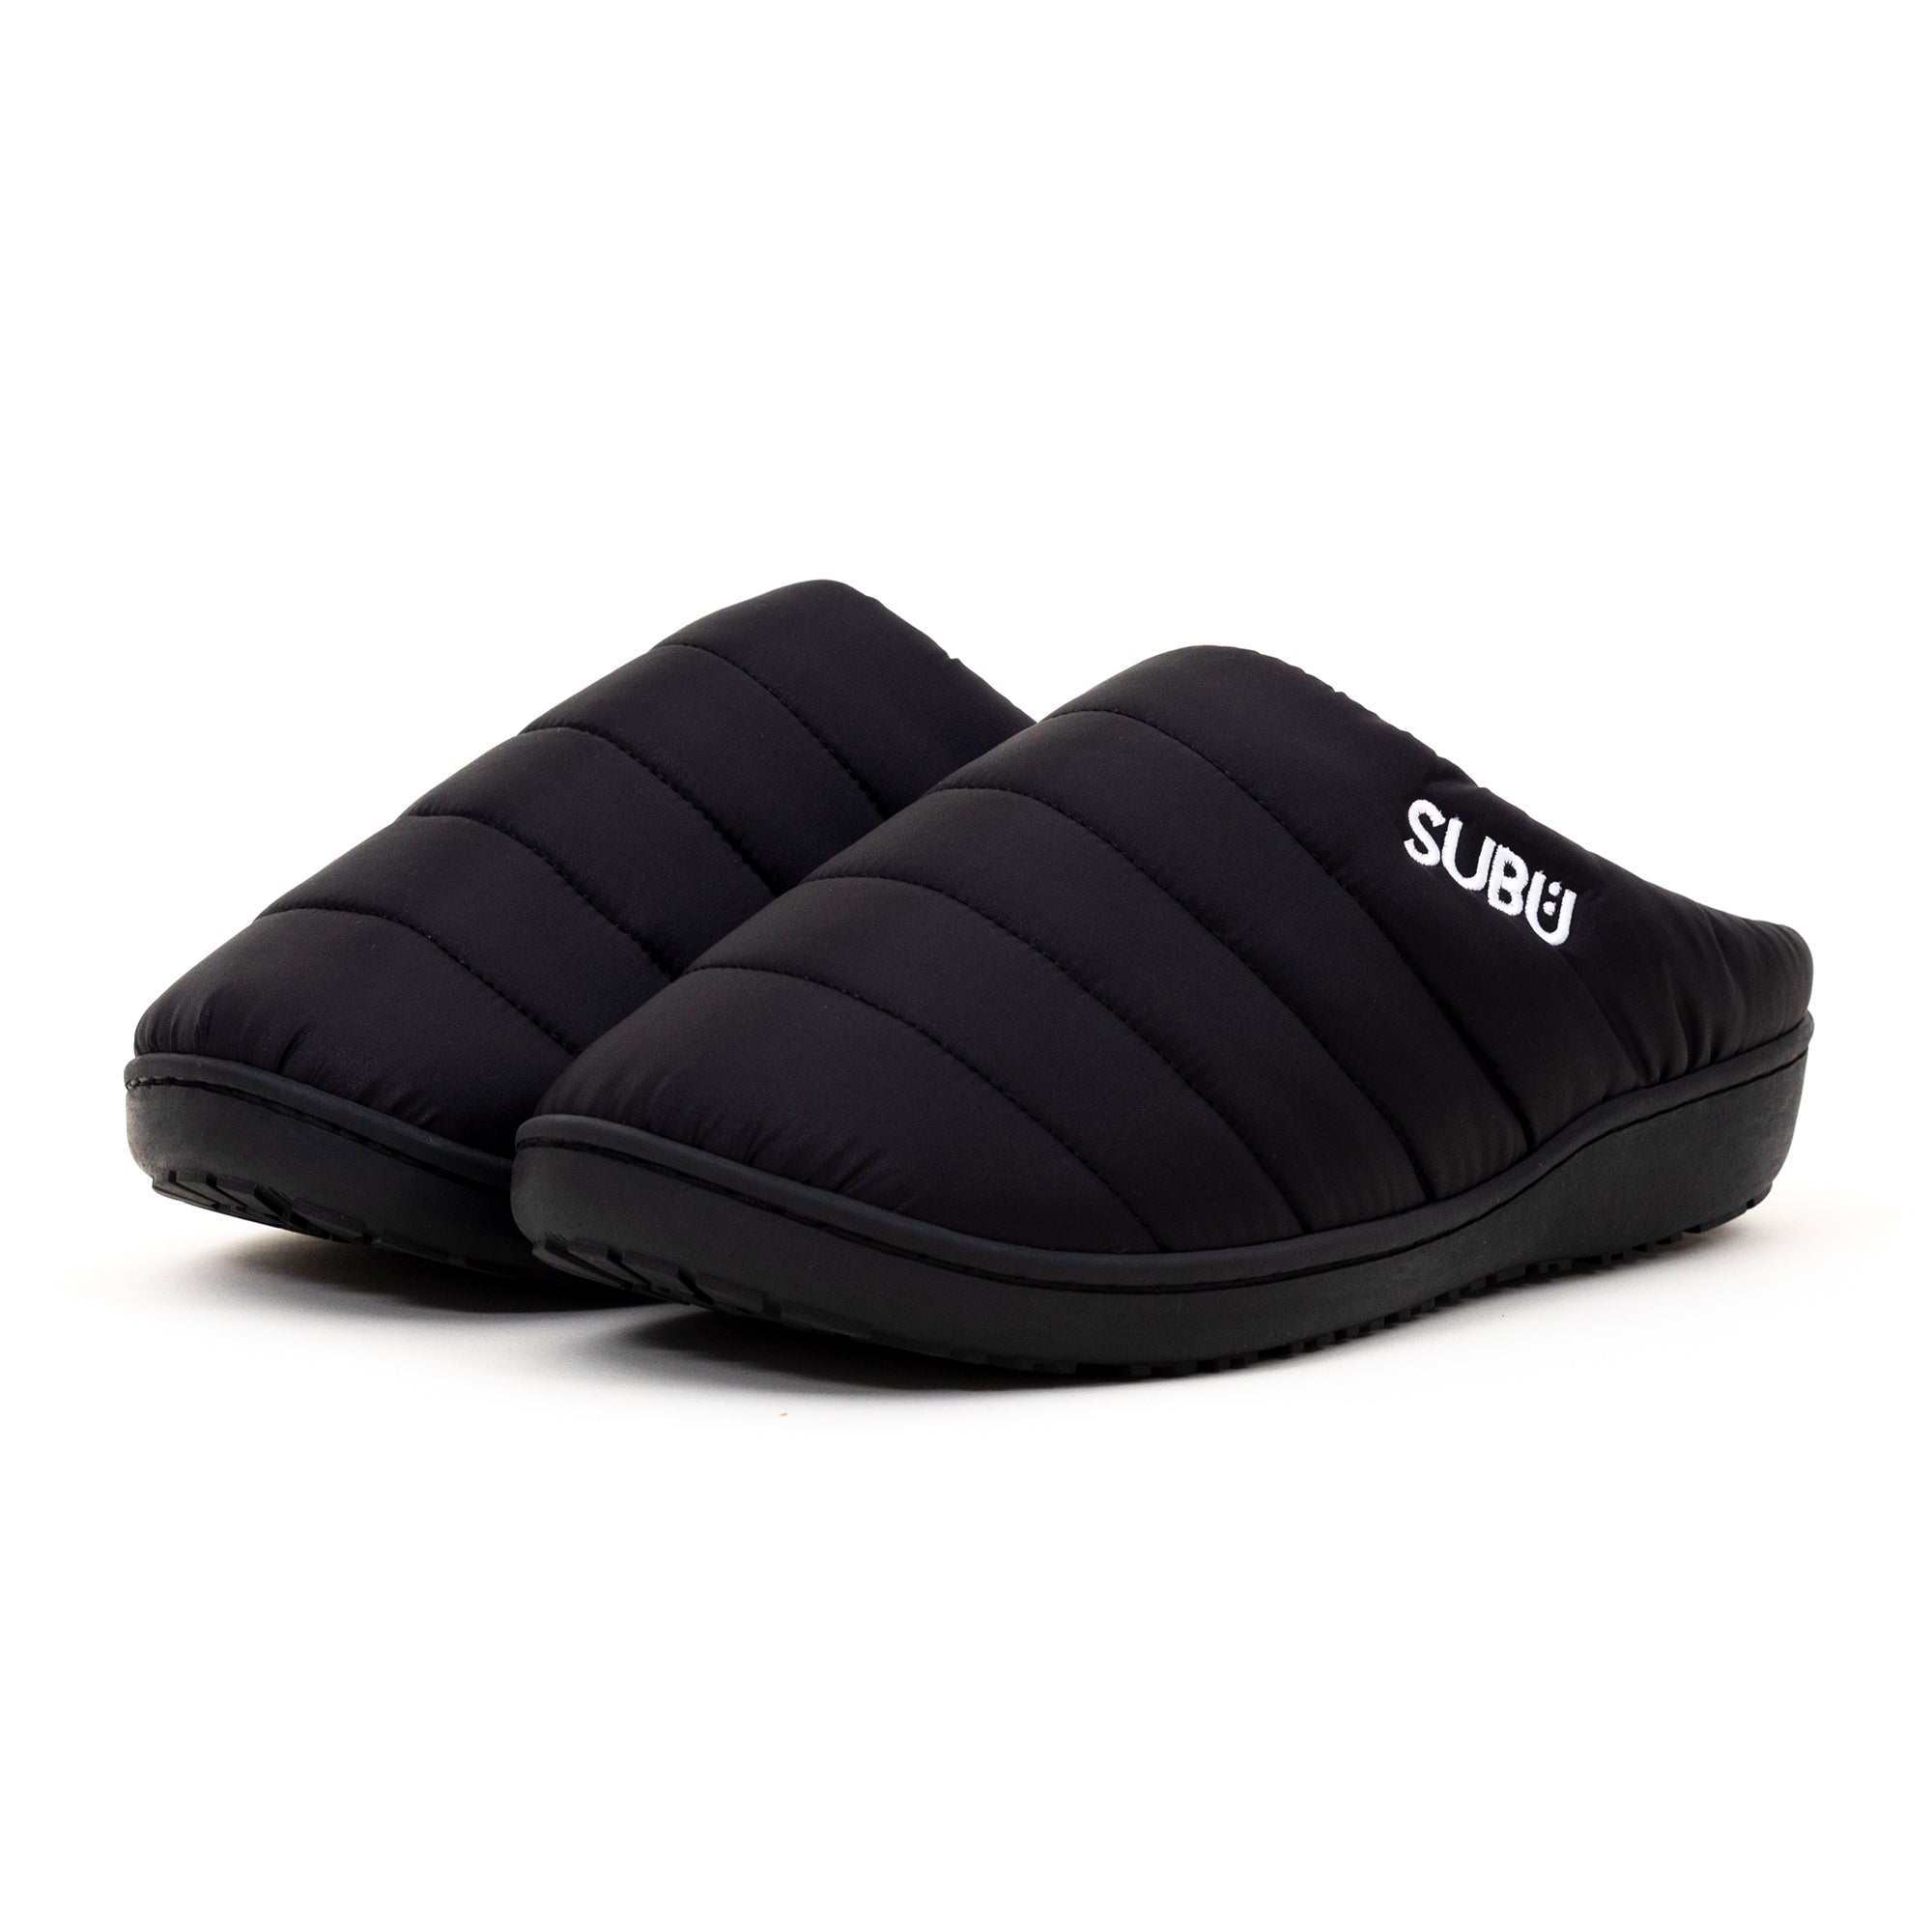 Subu Winter Slippers - Black